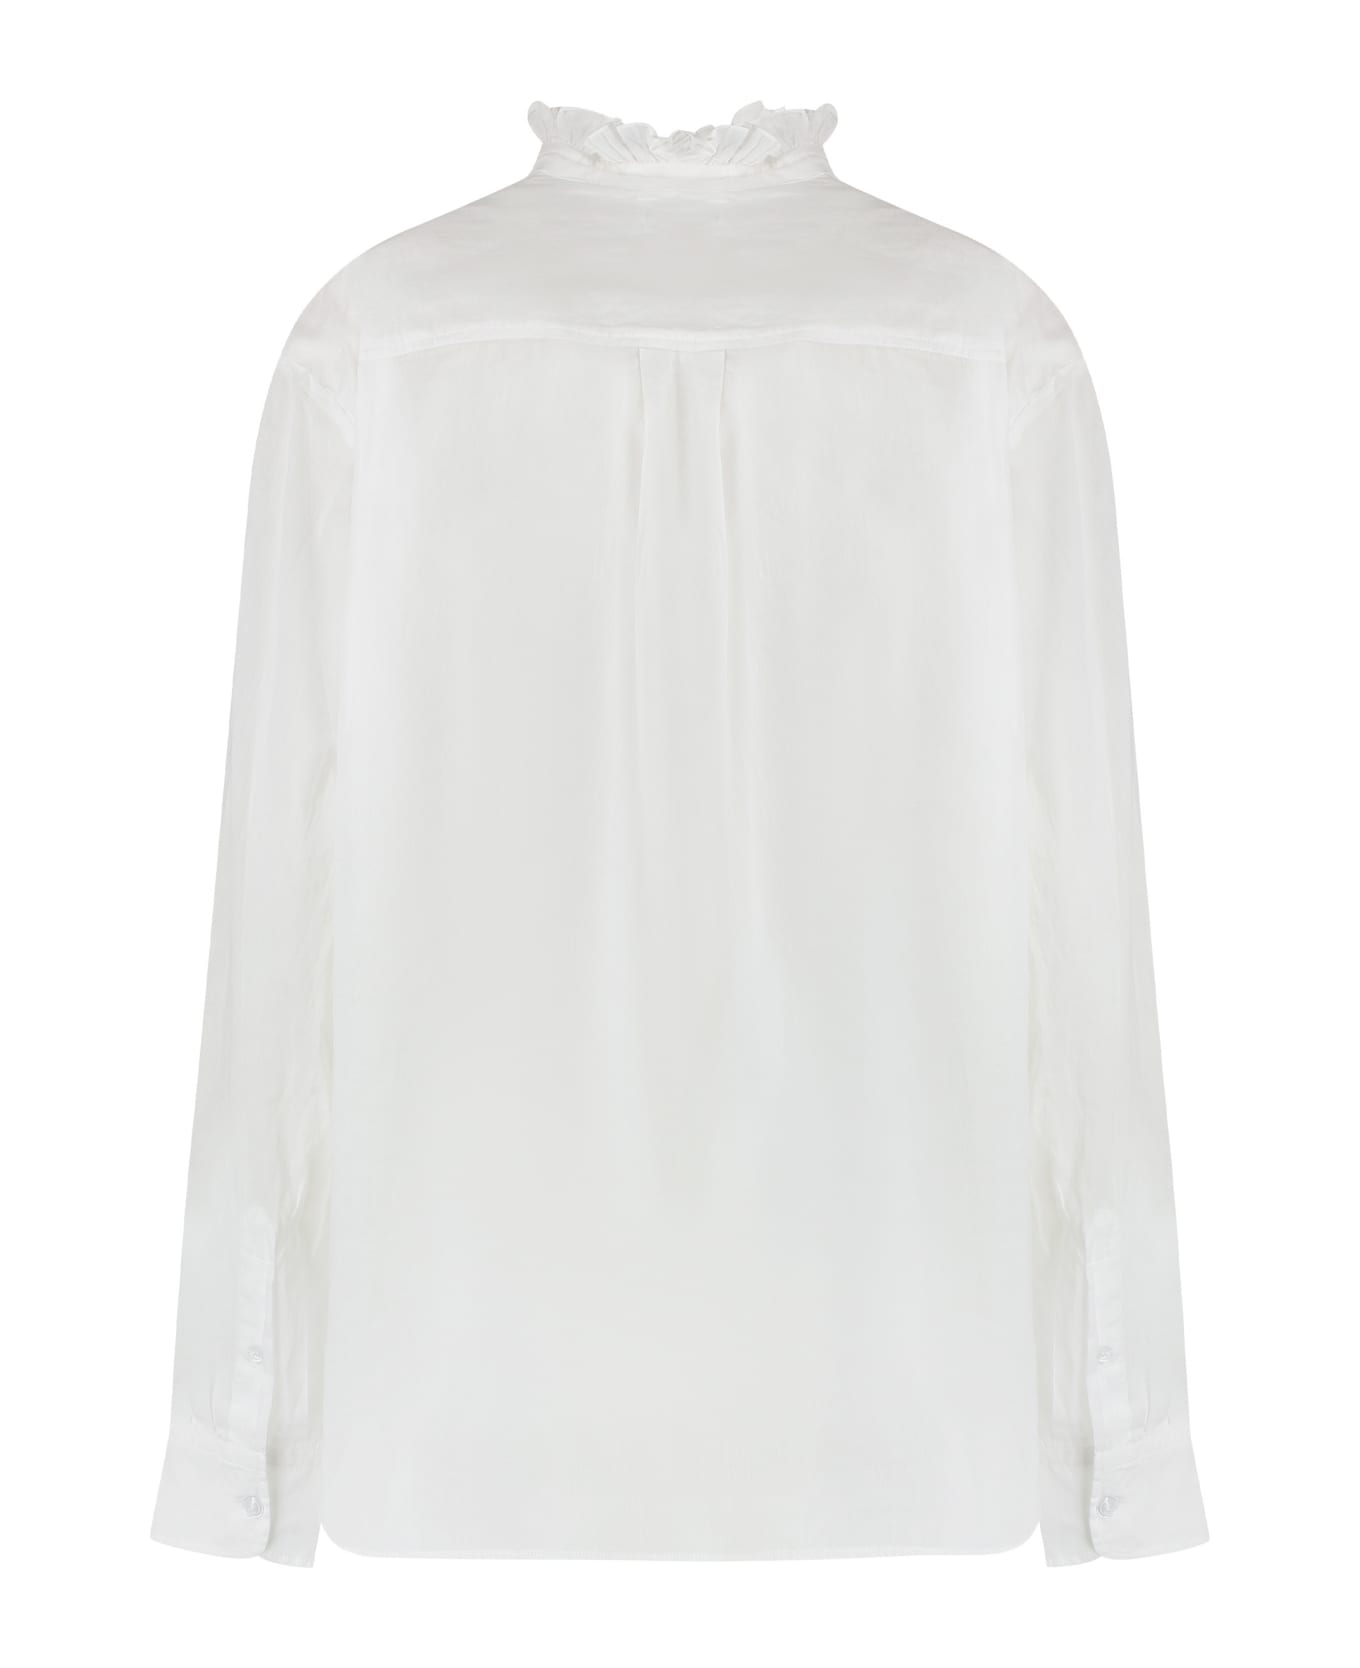 Marant Étoile Gamble Cotton Shirt - White